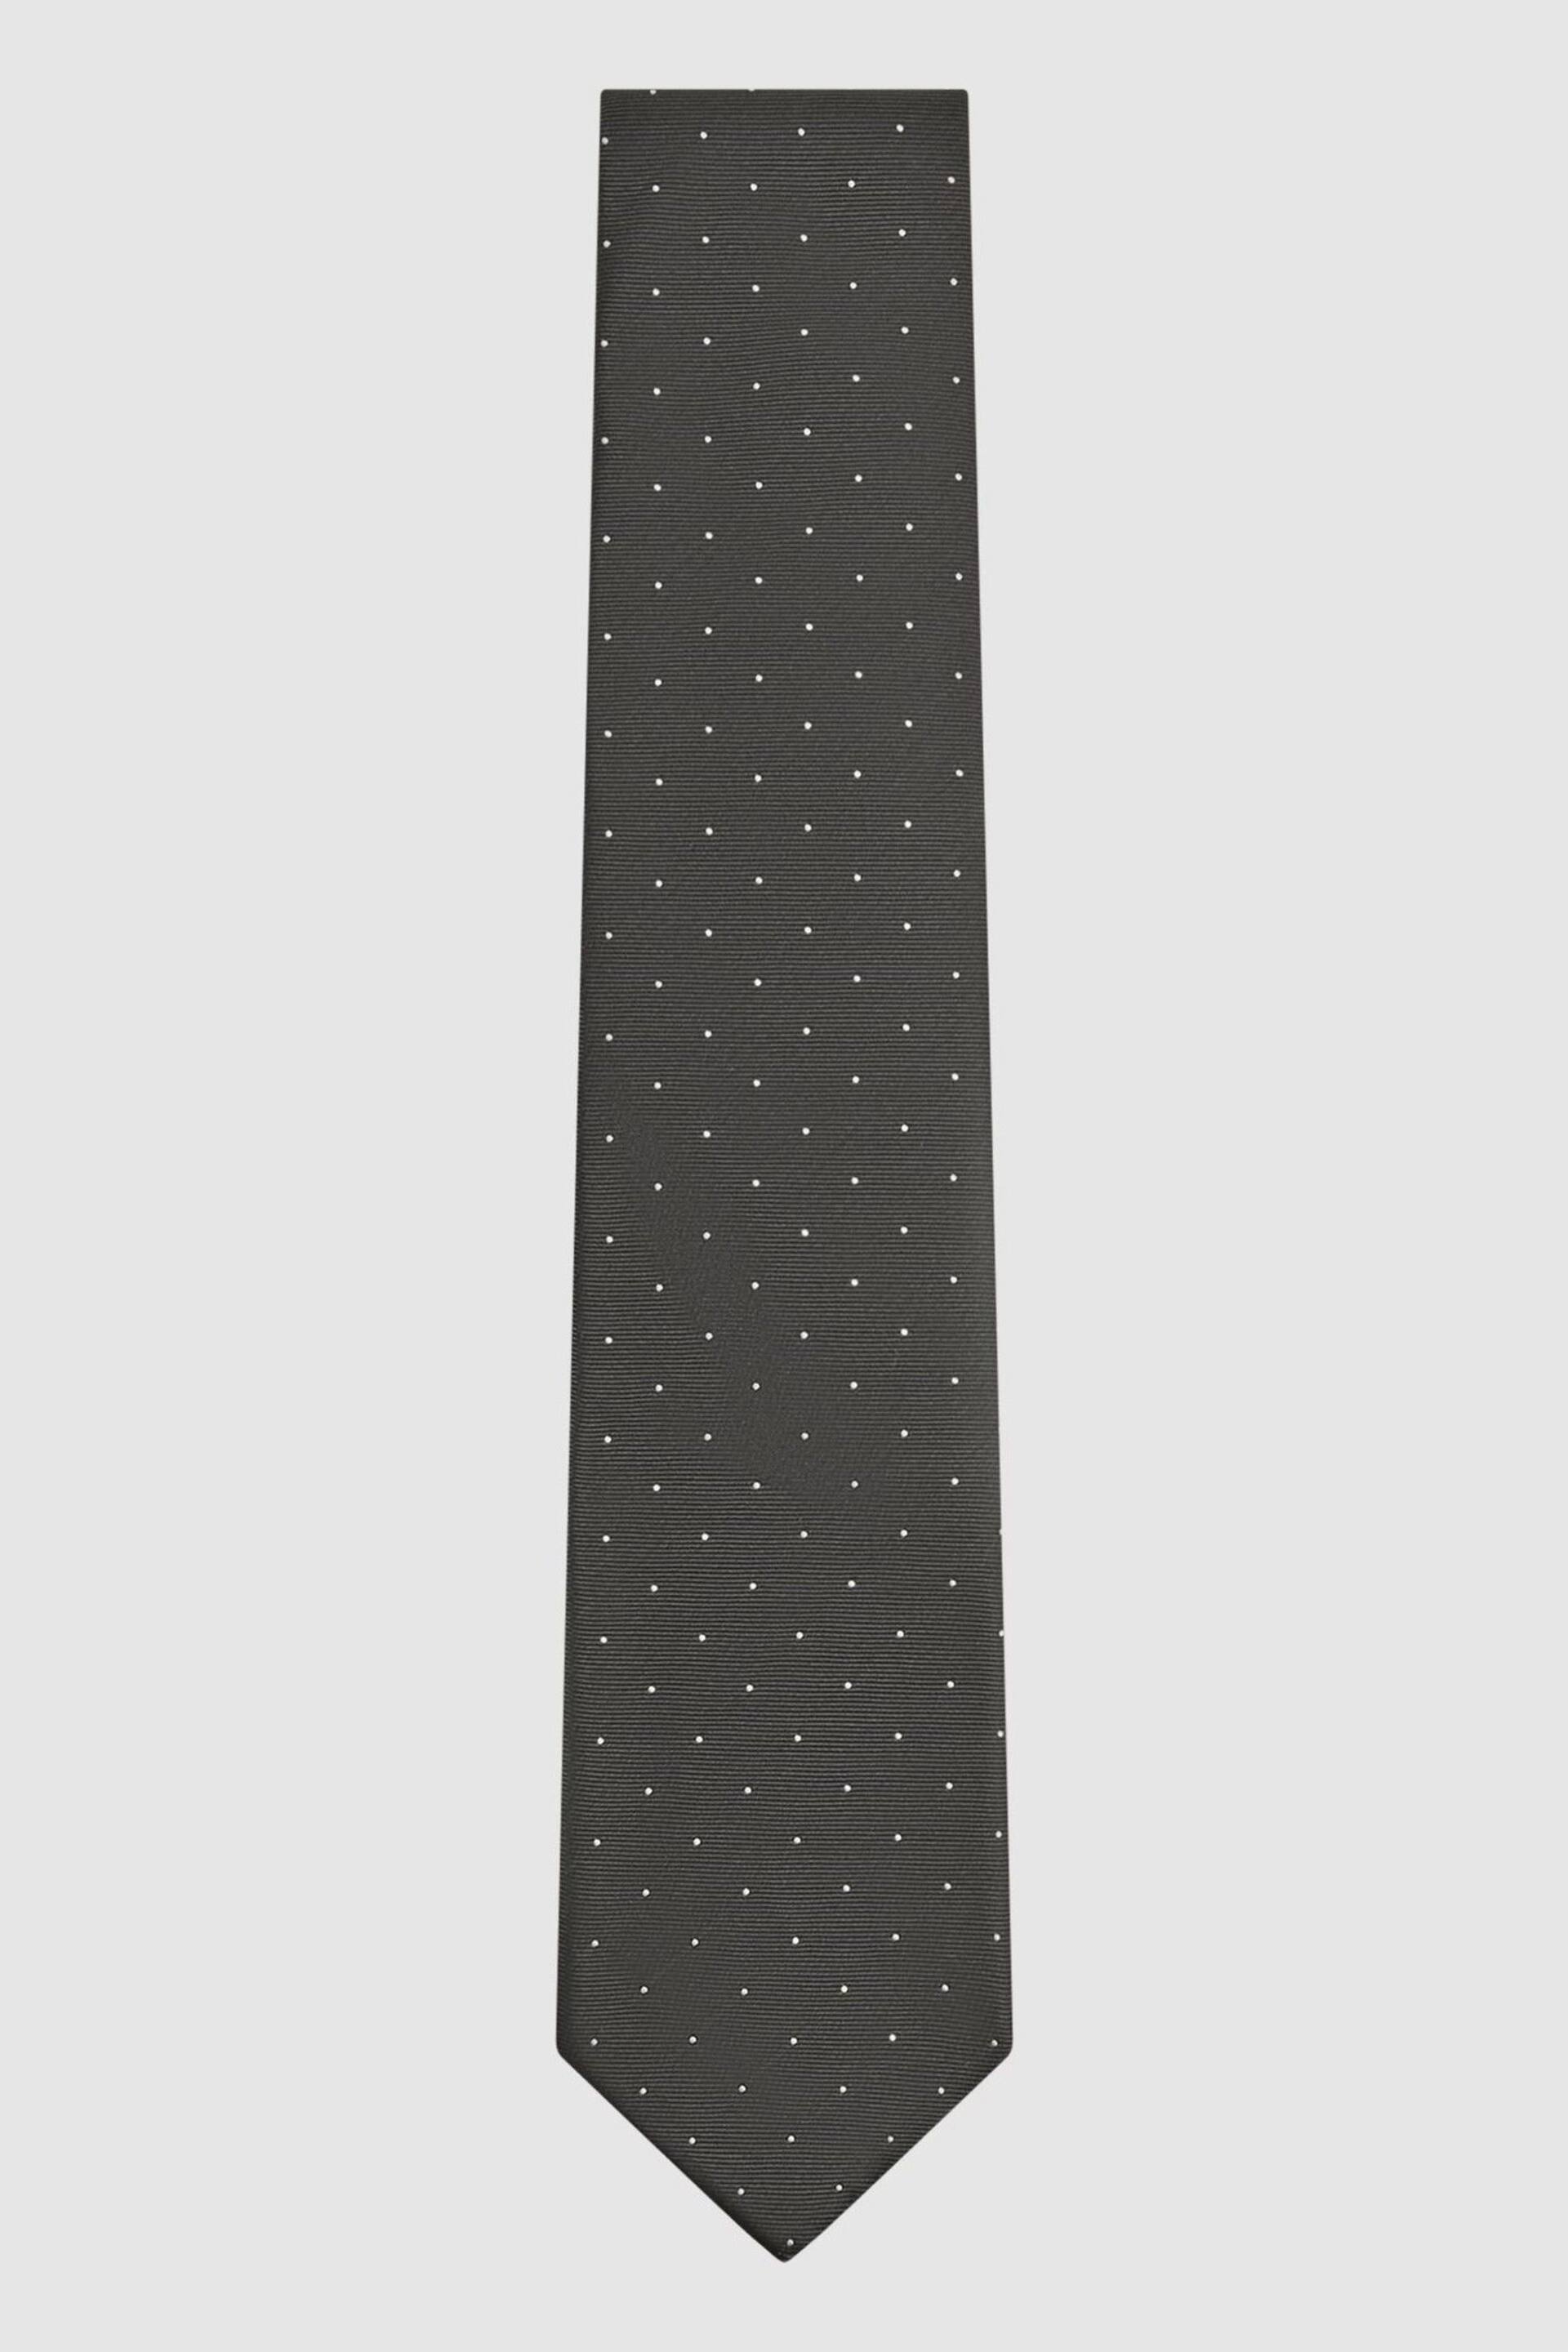 Reiss Charcoal Liam Silk Polka Dot Tie - Image 1 of 5